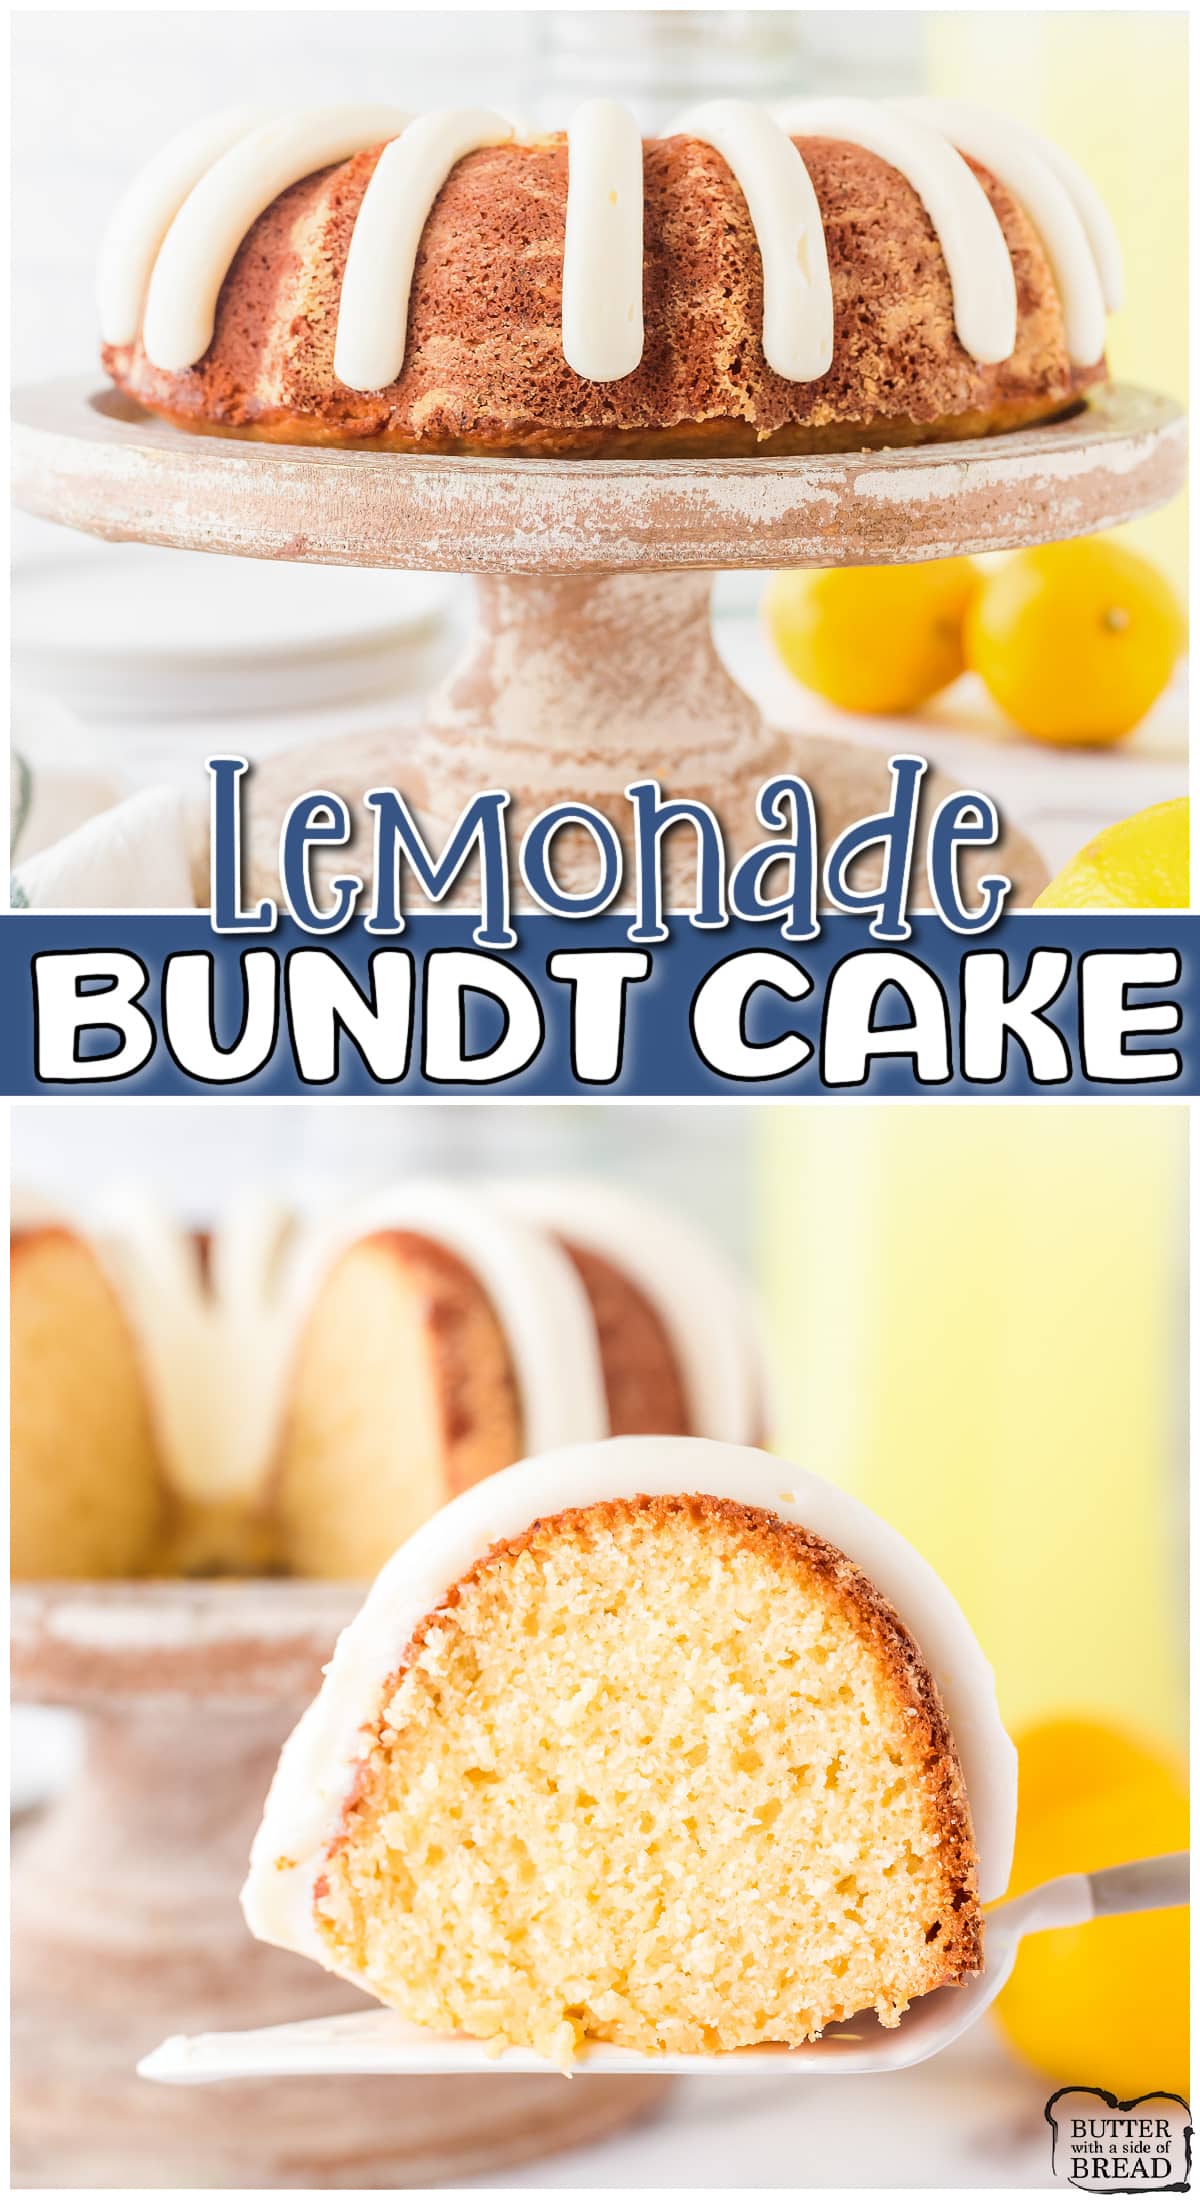 Lemonade Bundt Cake recipe made with butter, sugar, eggs, Greek yogurt & lemonade mix. Delightfully sweet & tart lemon cake with incredible flavor that's perfect for Spring!